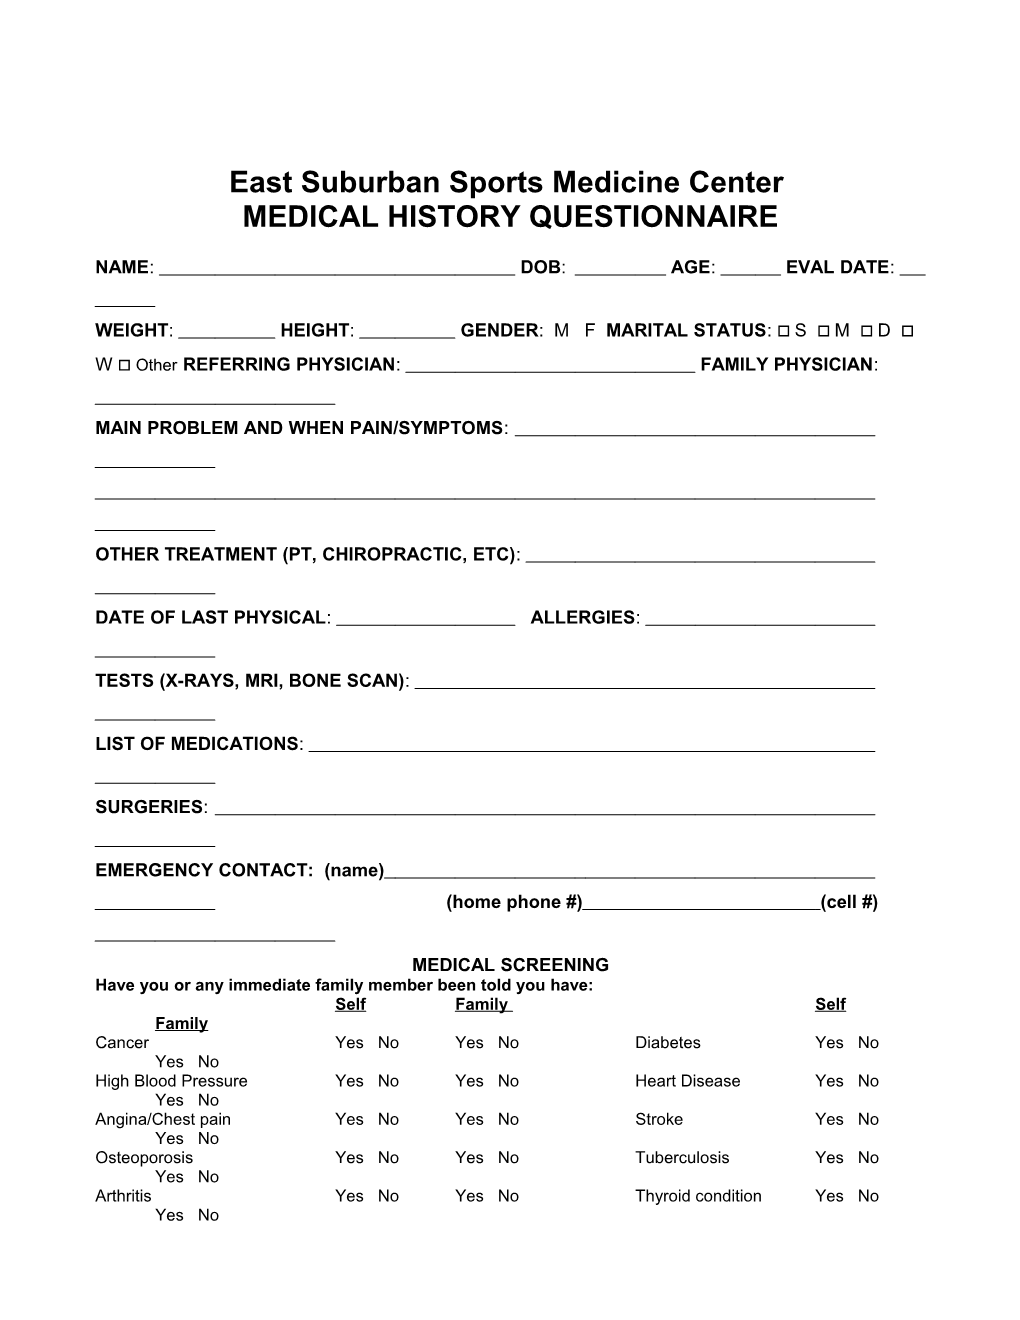 East Suburban Sports Medicine Center